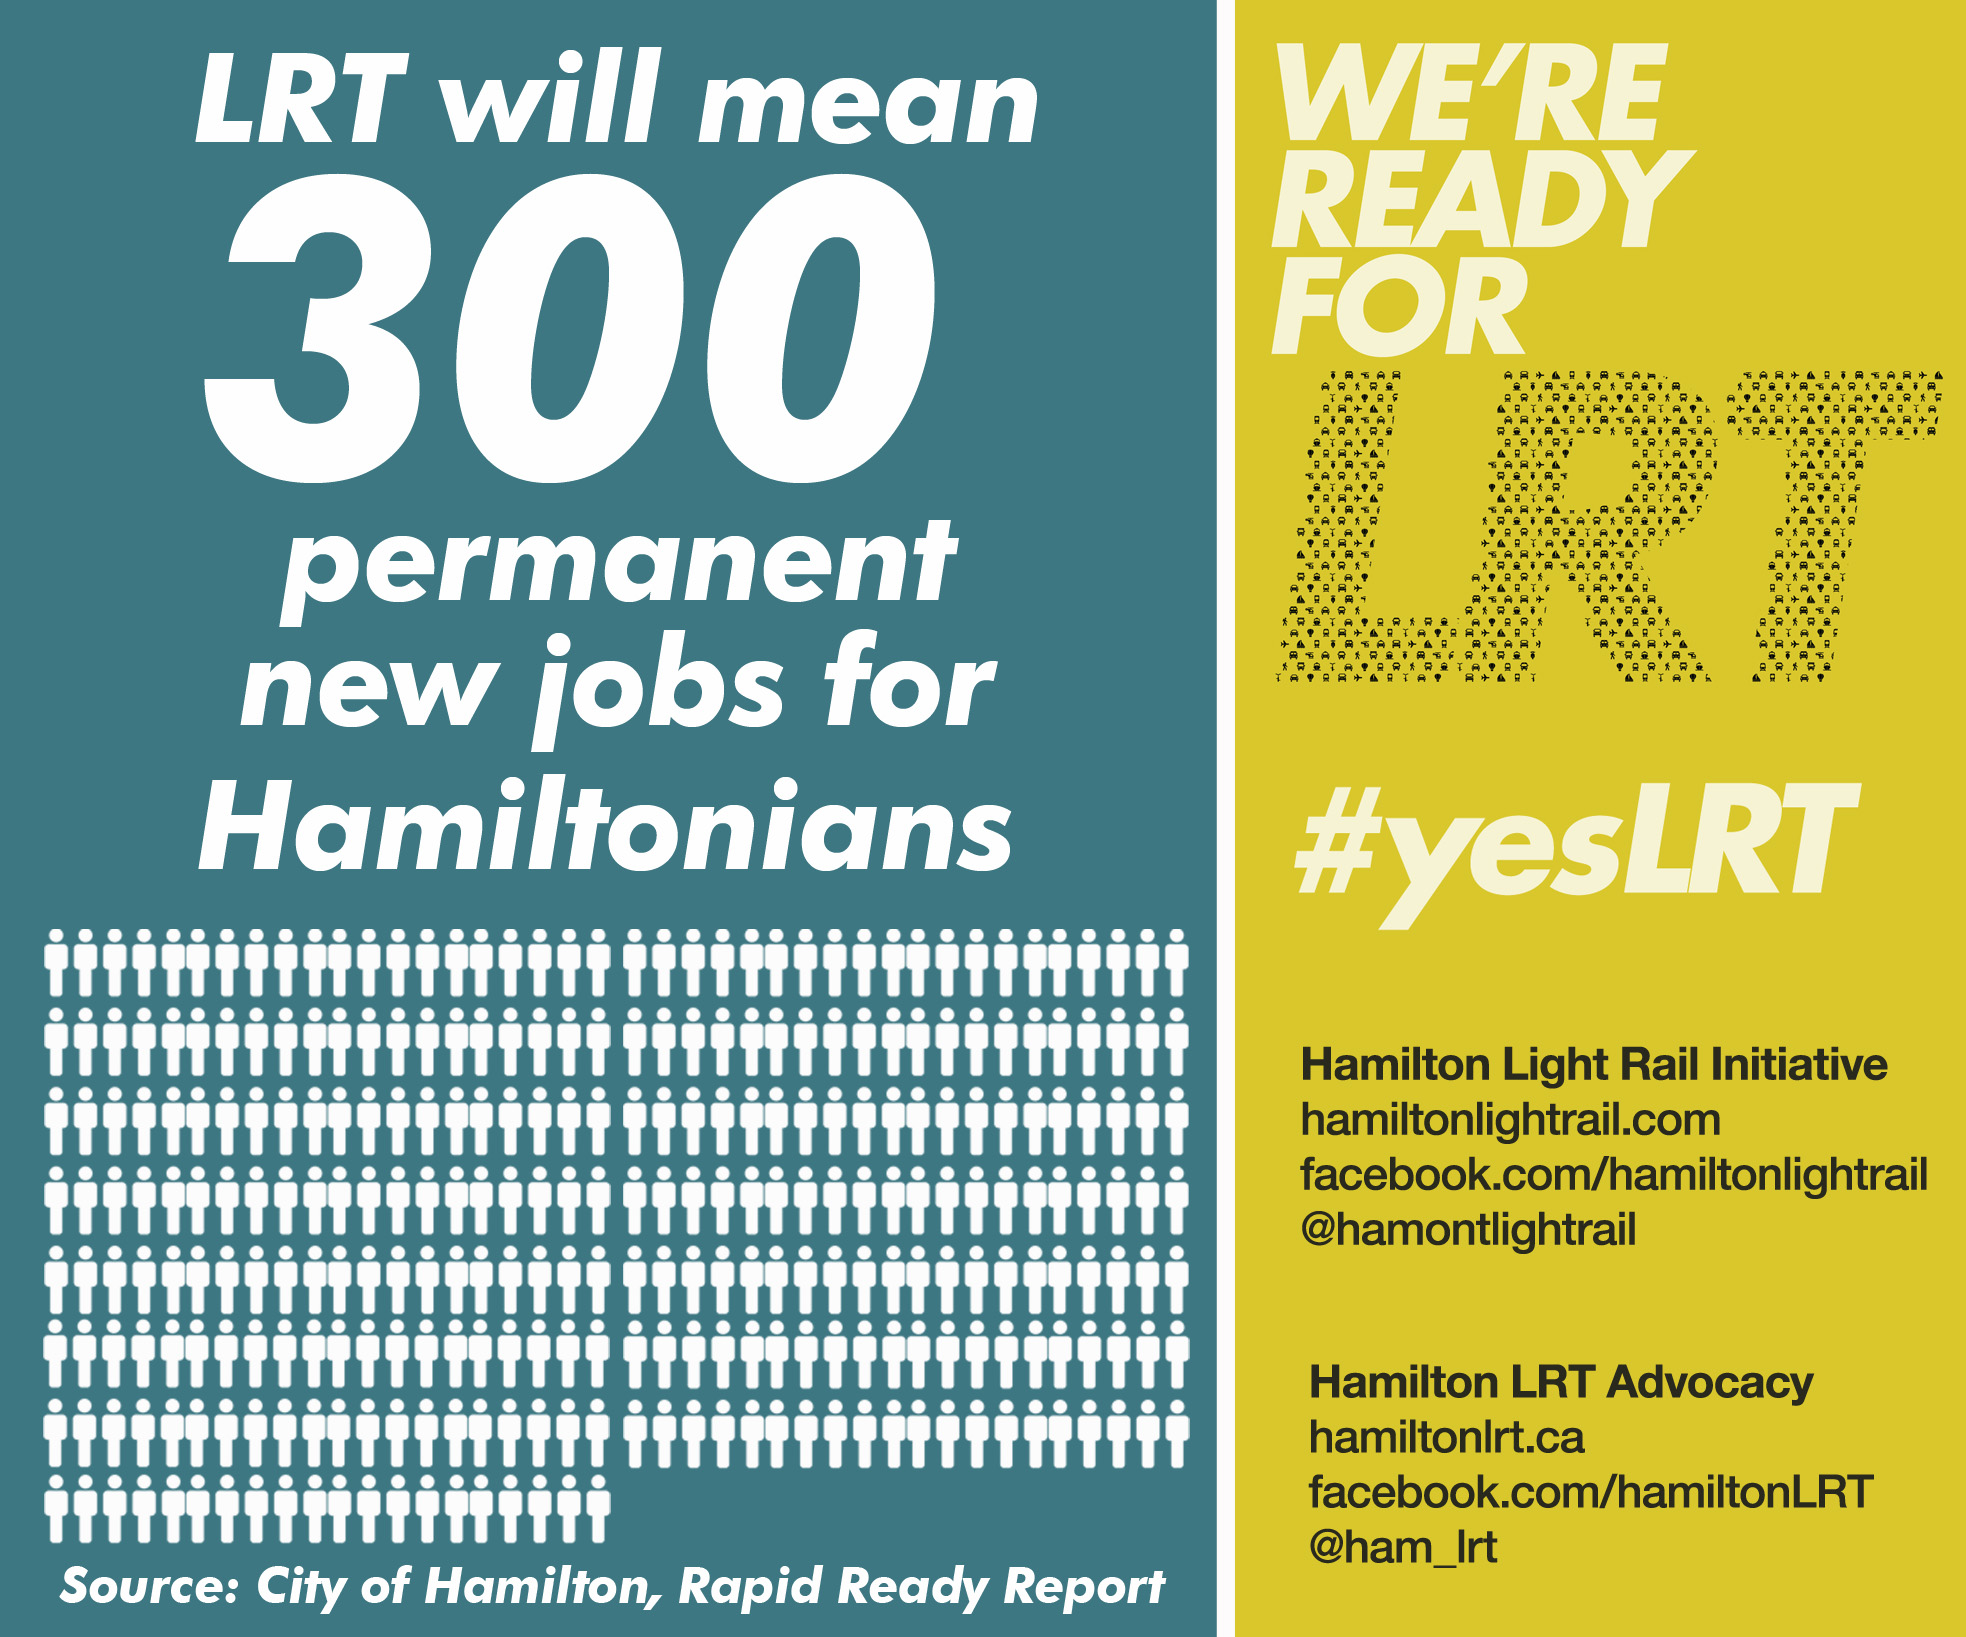 LRT will mean 300 permanent new jobs for Hamiltonians.